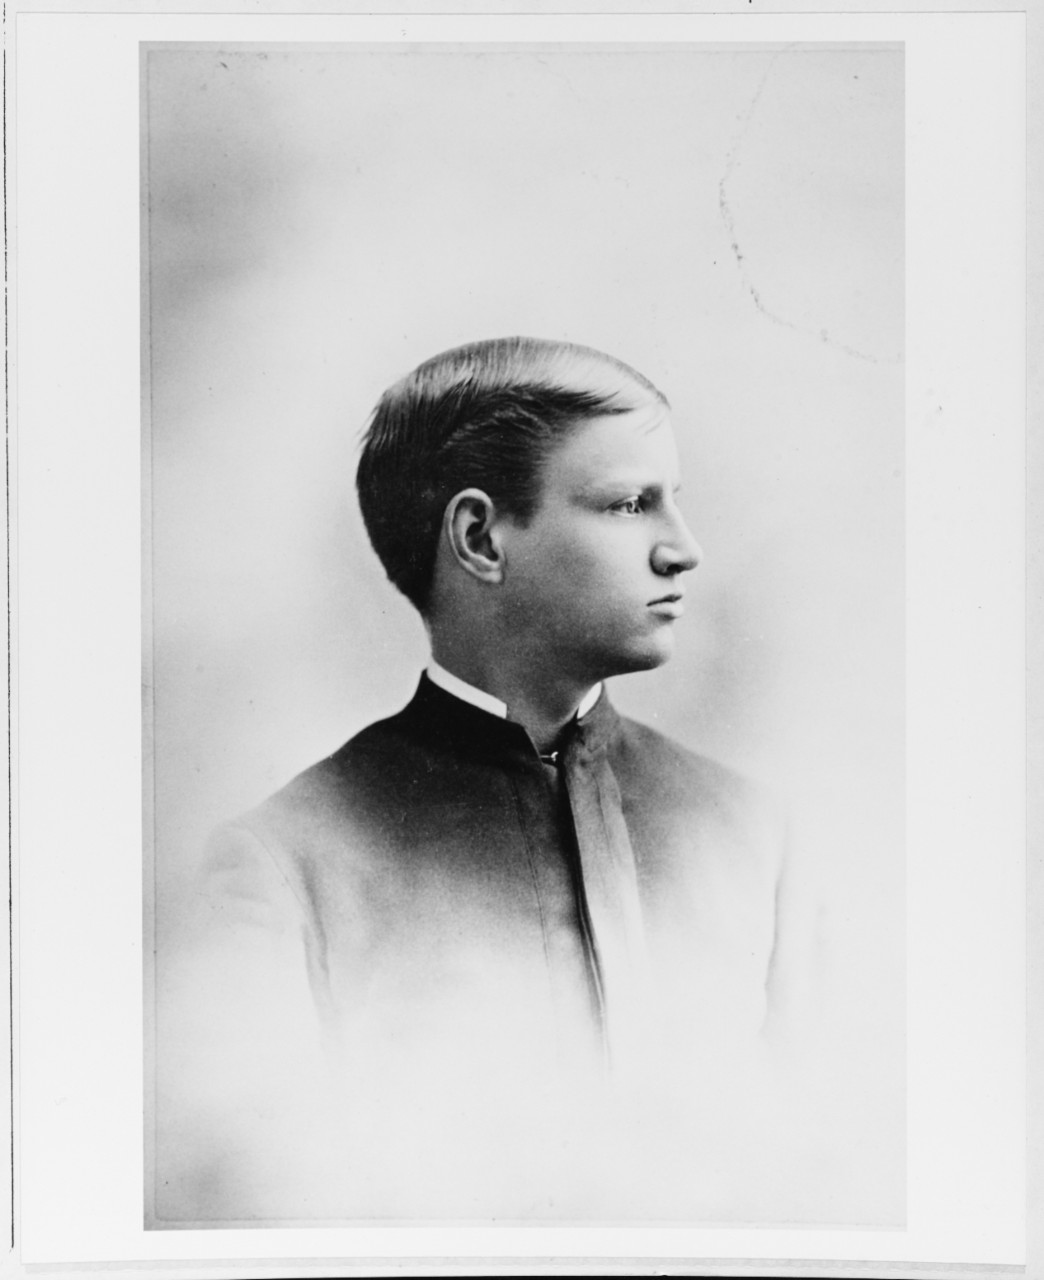 Plebe Guy Hamilton Burrage, Naval Academy Class of 1887